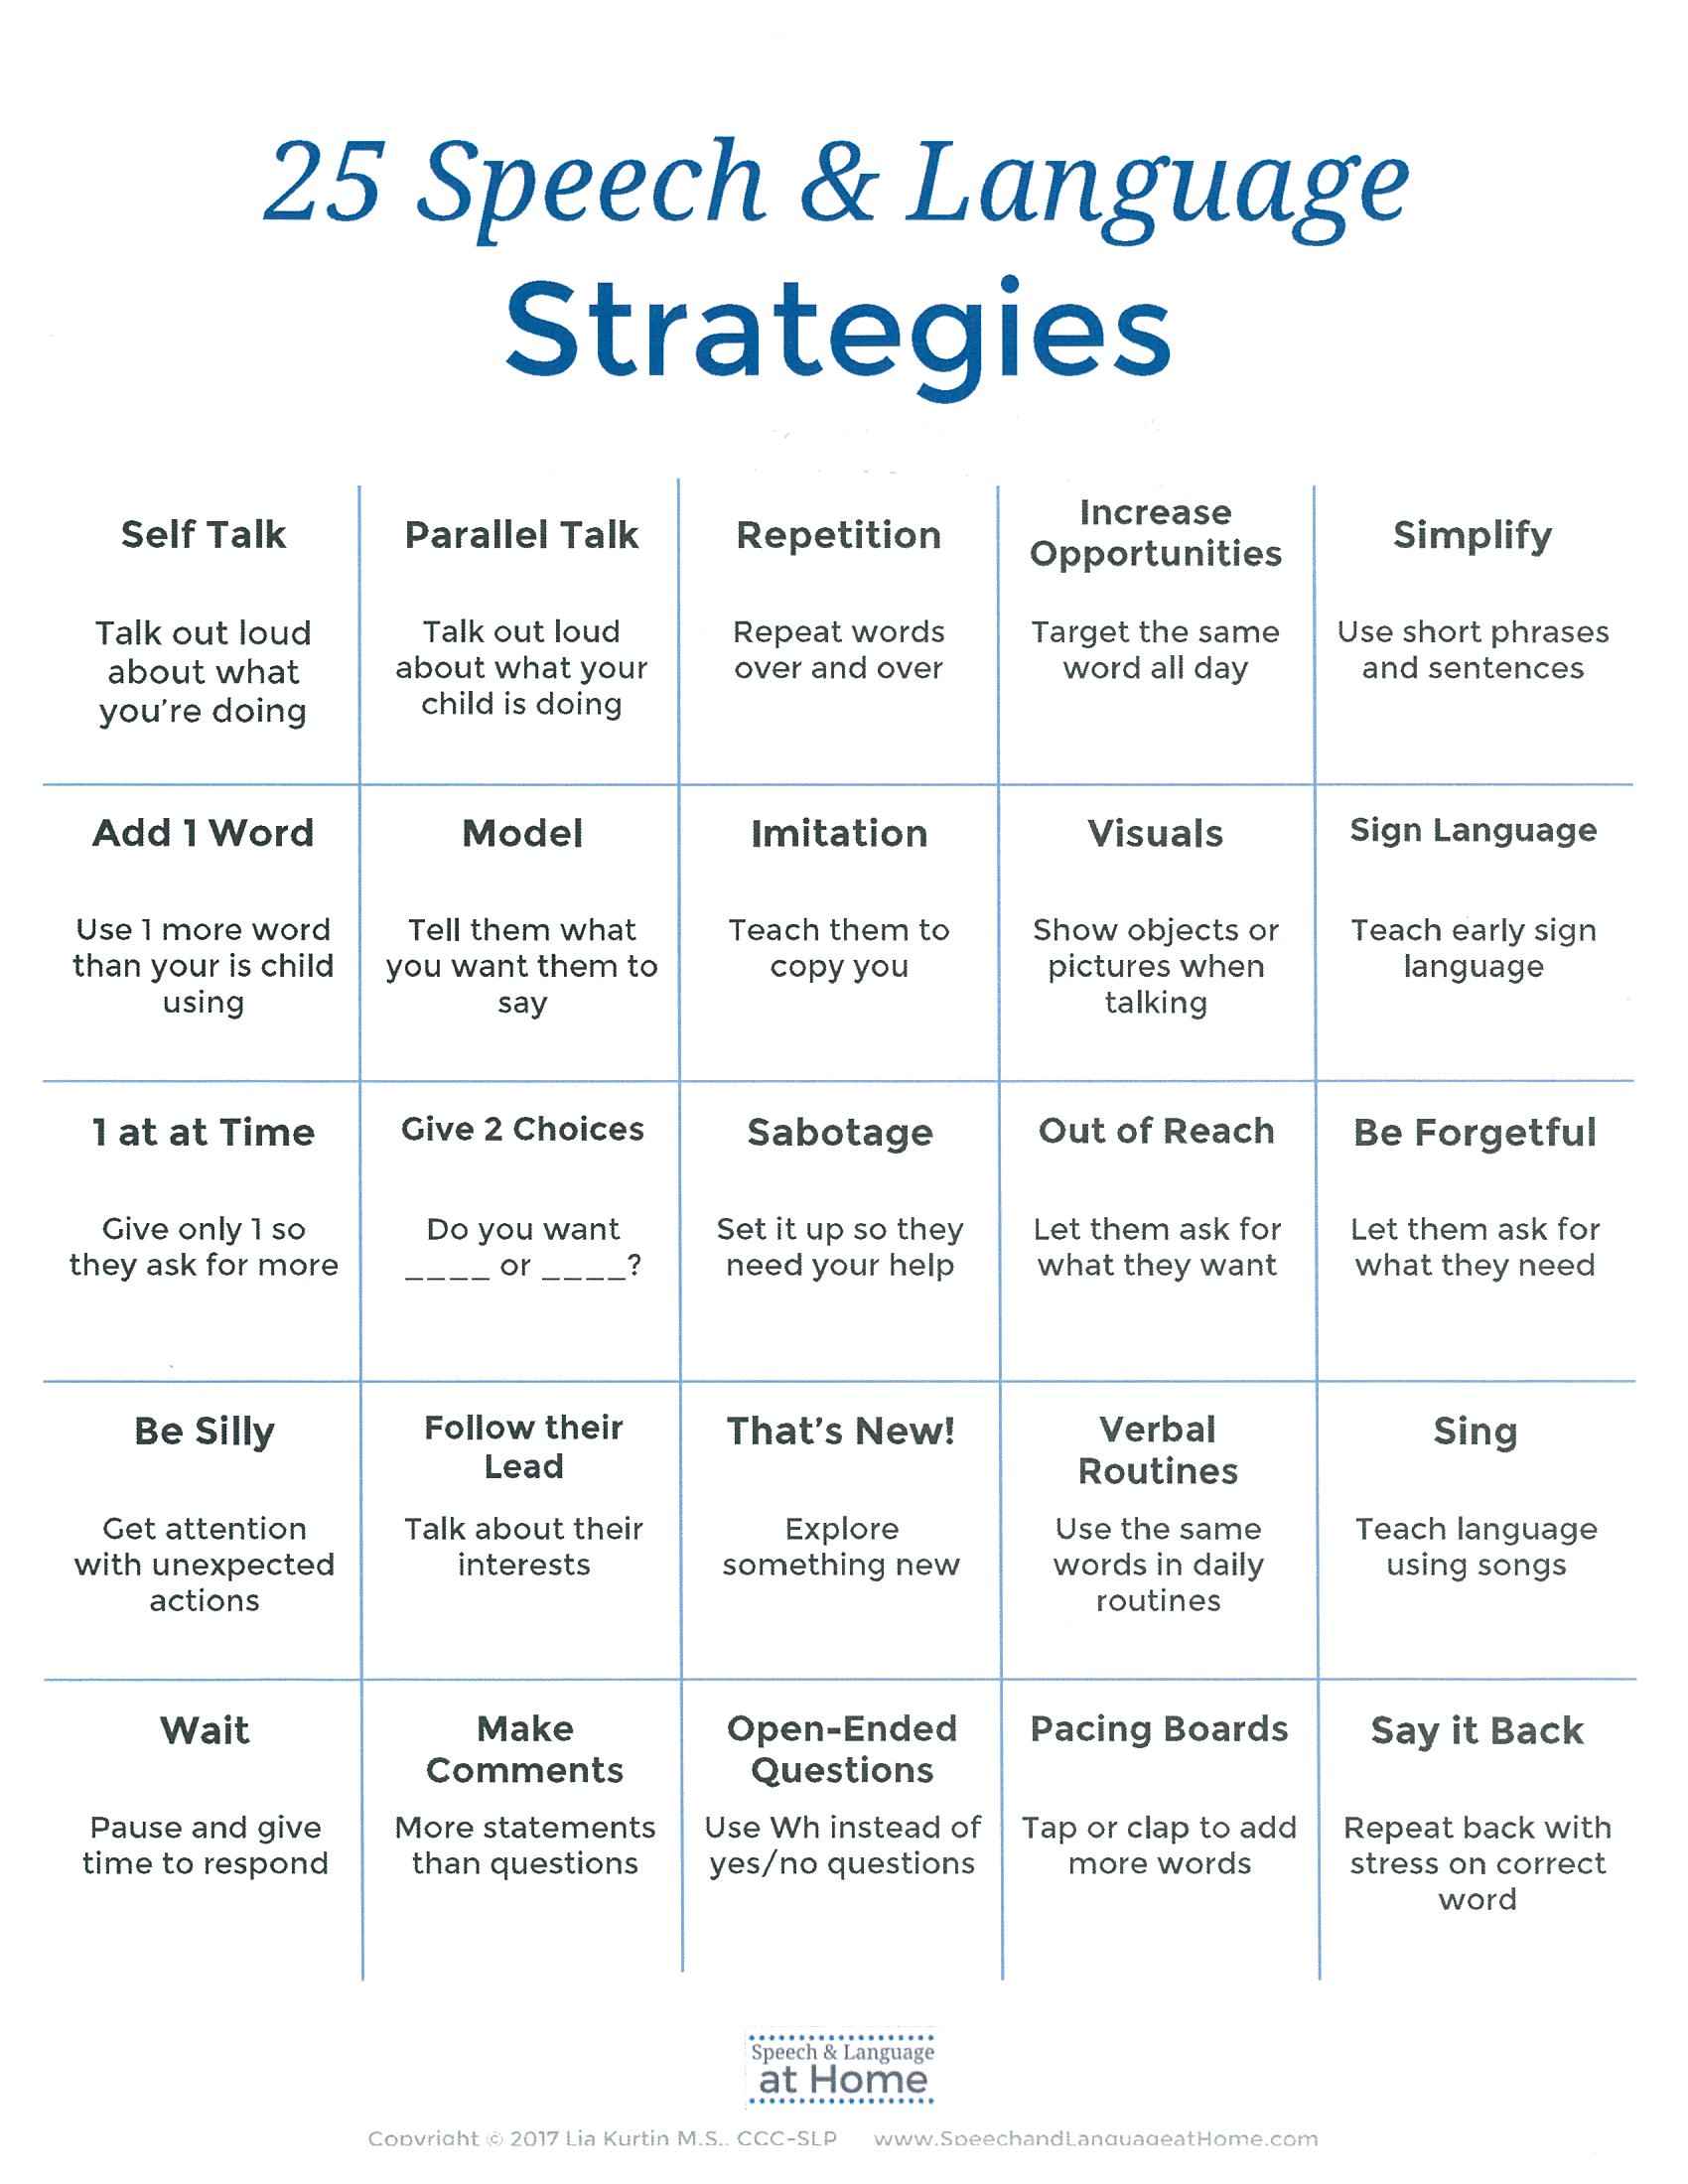 25 Speech & Language Strategies 